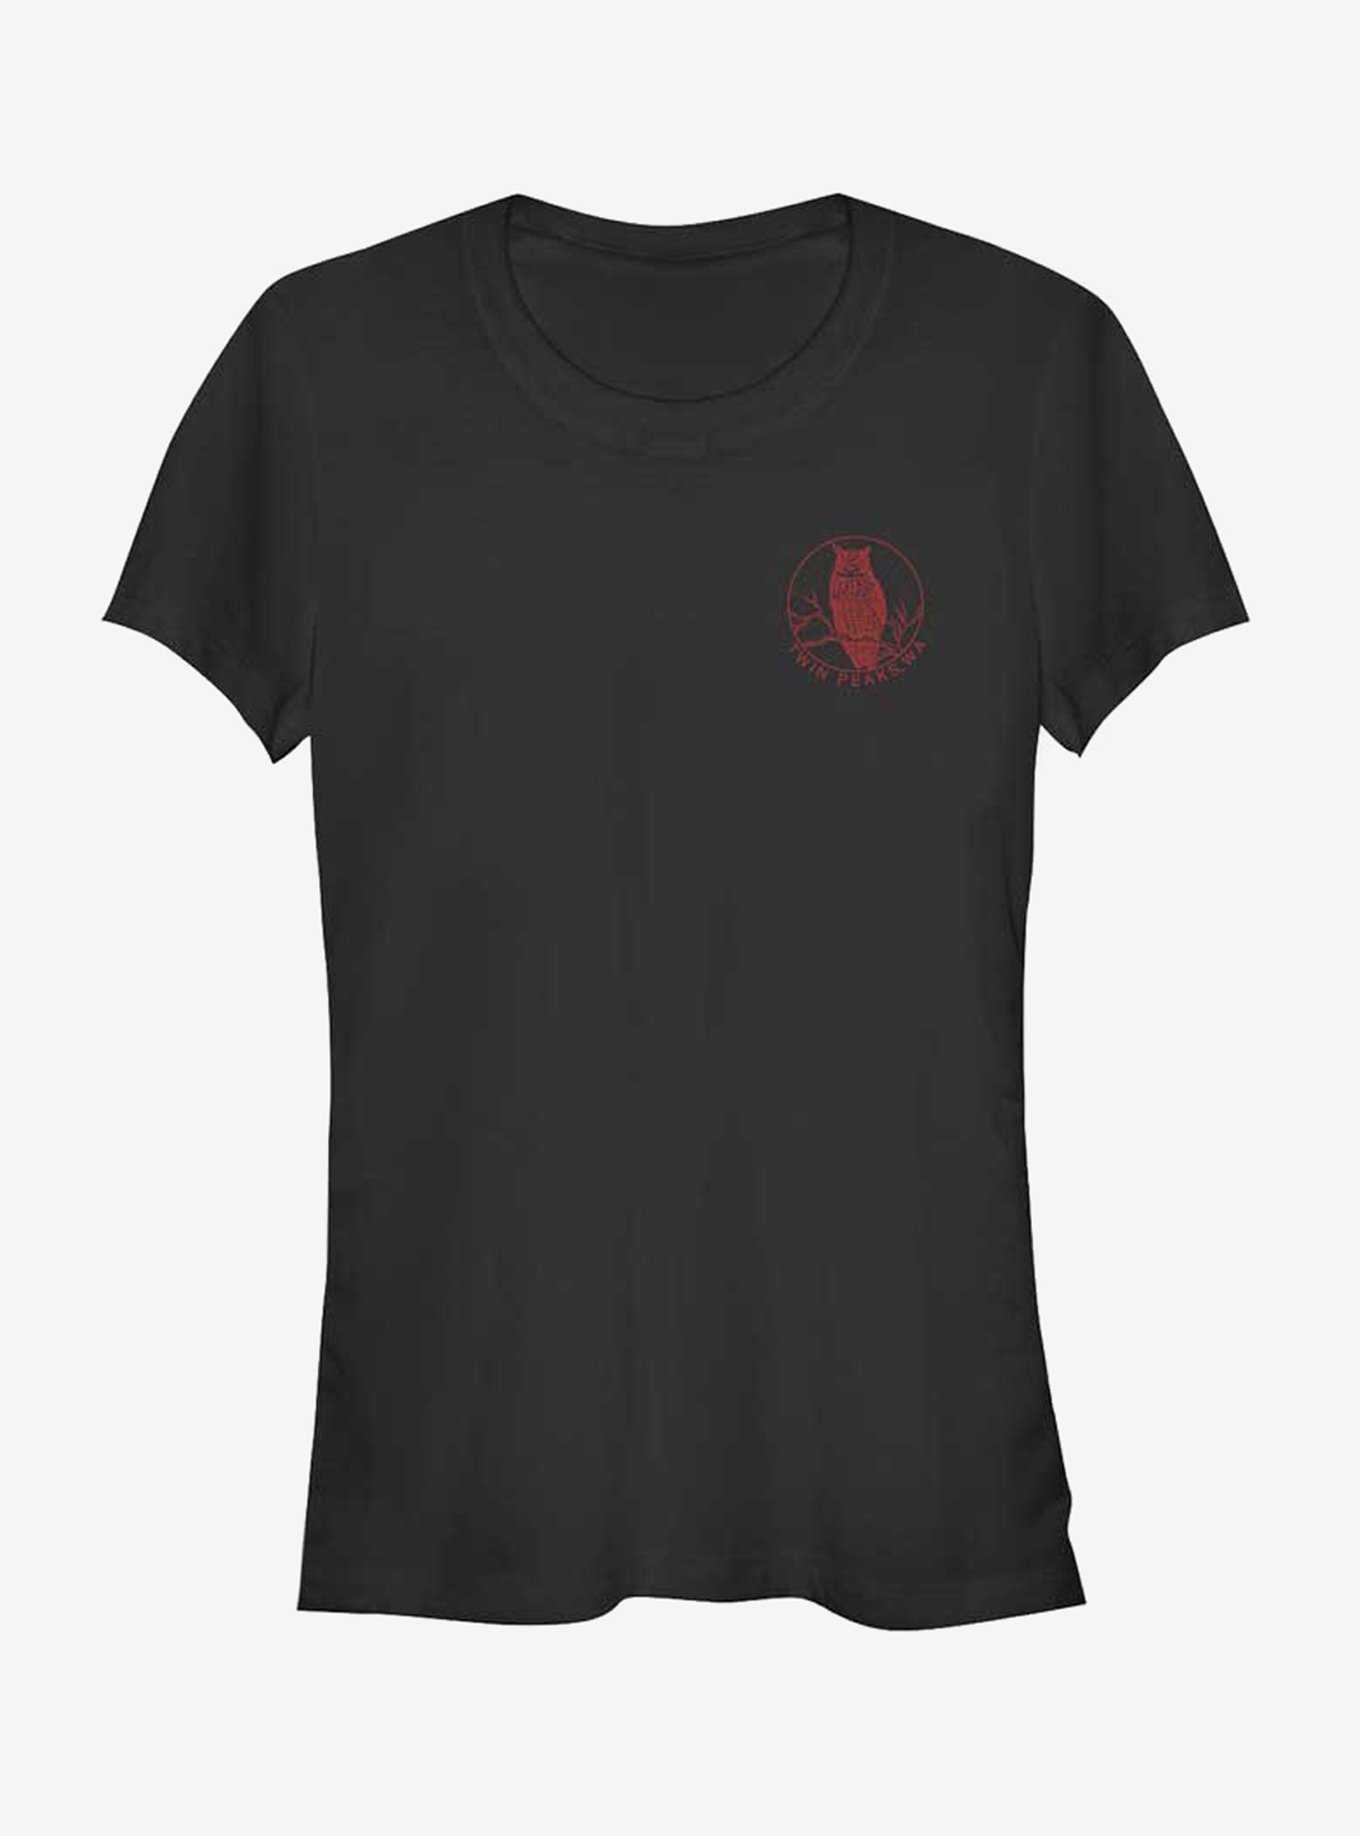 Twin Peaks Red Owl Badge Girls T-Shirt, , hi-res